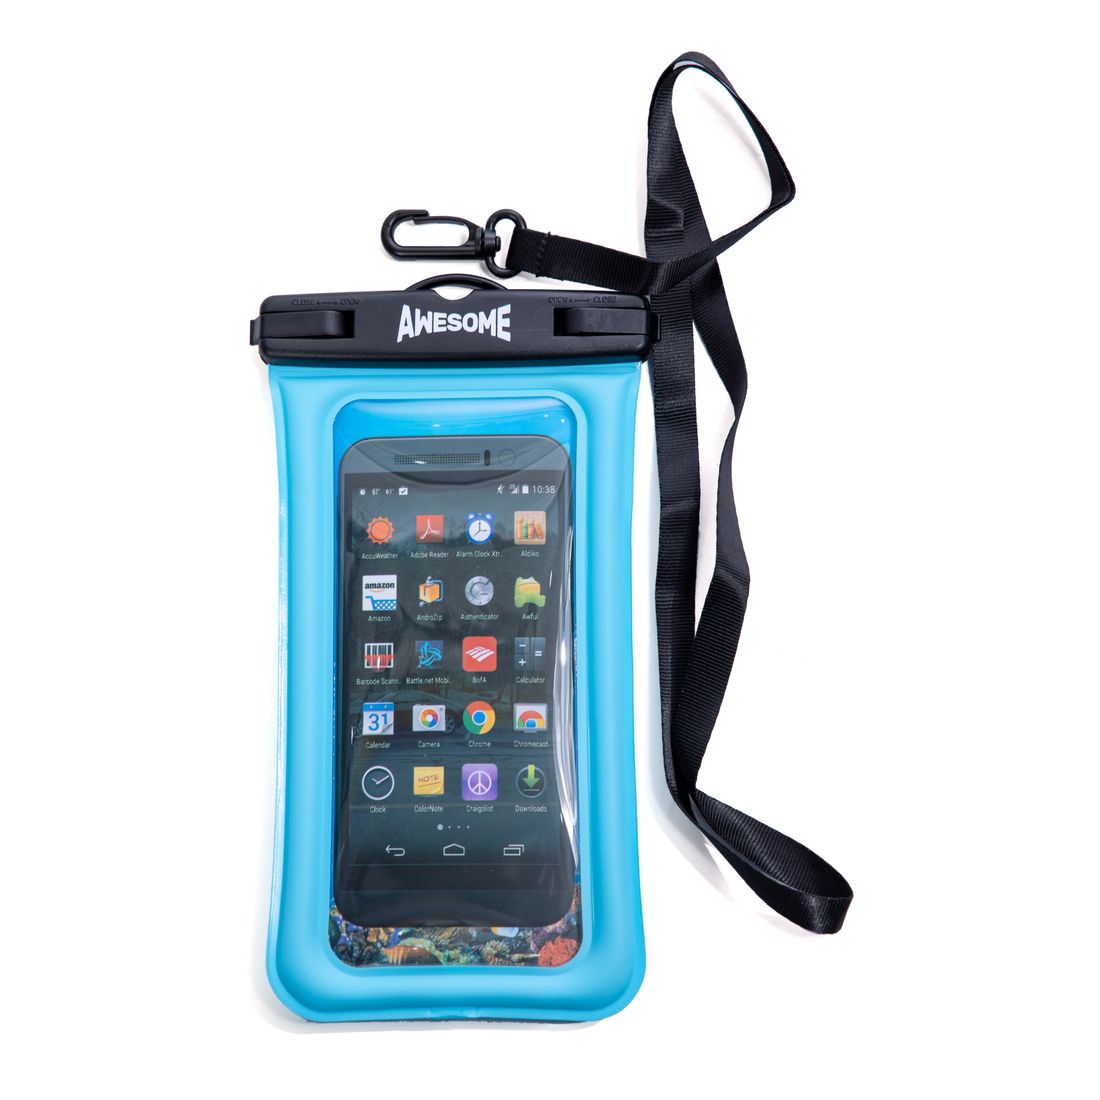 Awesome Waterproof Phone Bag Floating Blue